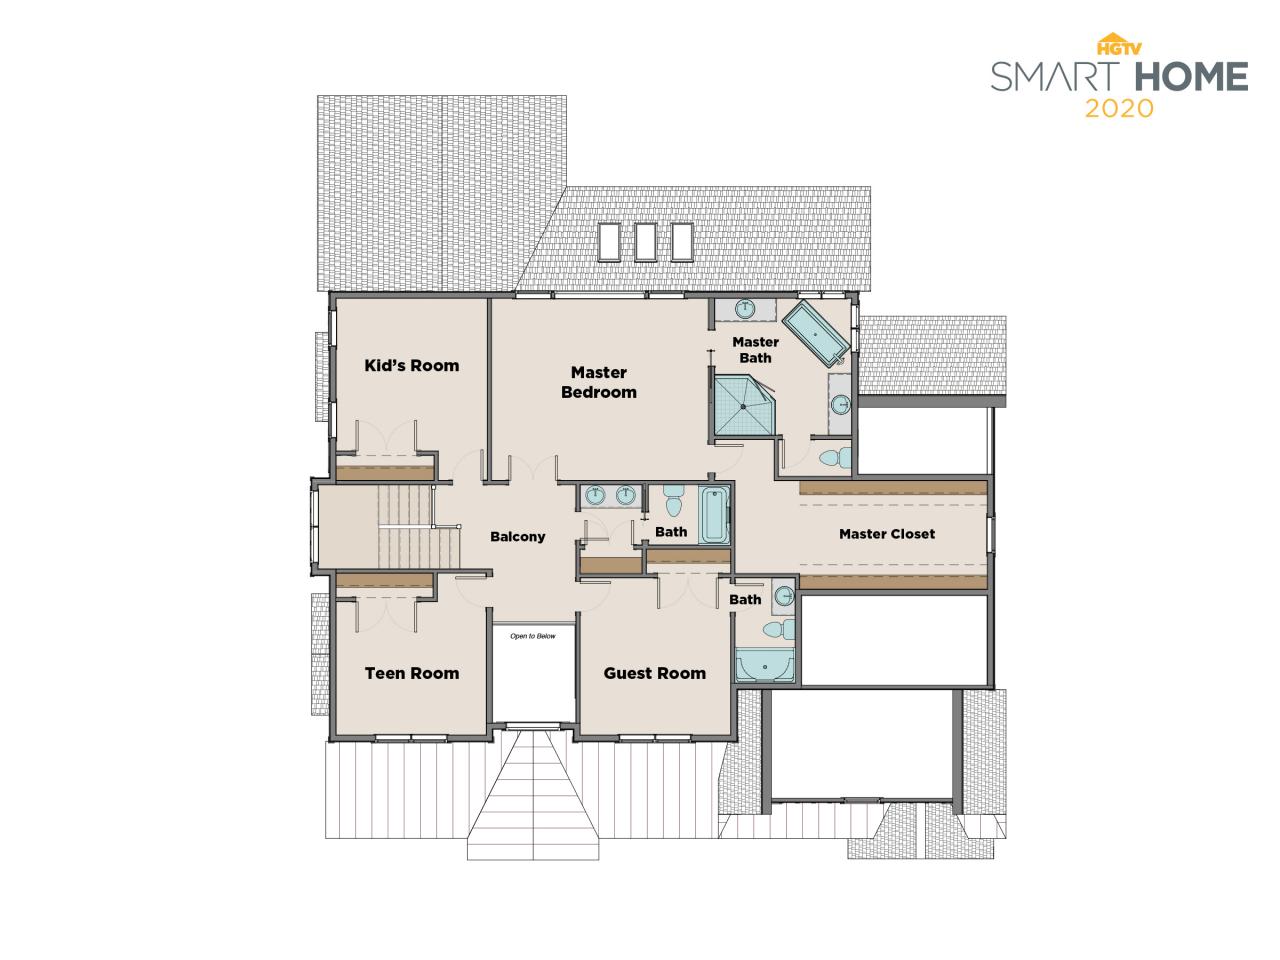 HGTV Smart Home 2020 Floor Plan | Tour the HGTV Smart Home 2020 in